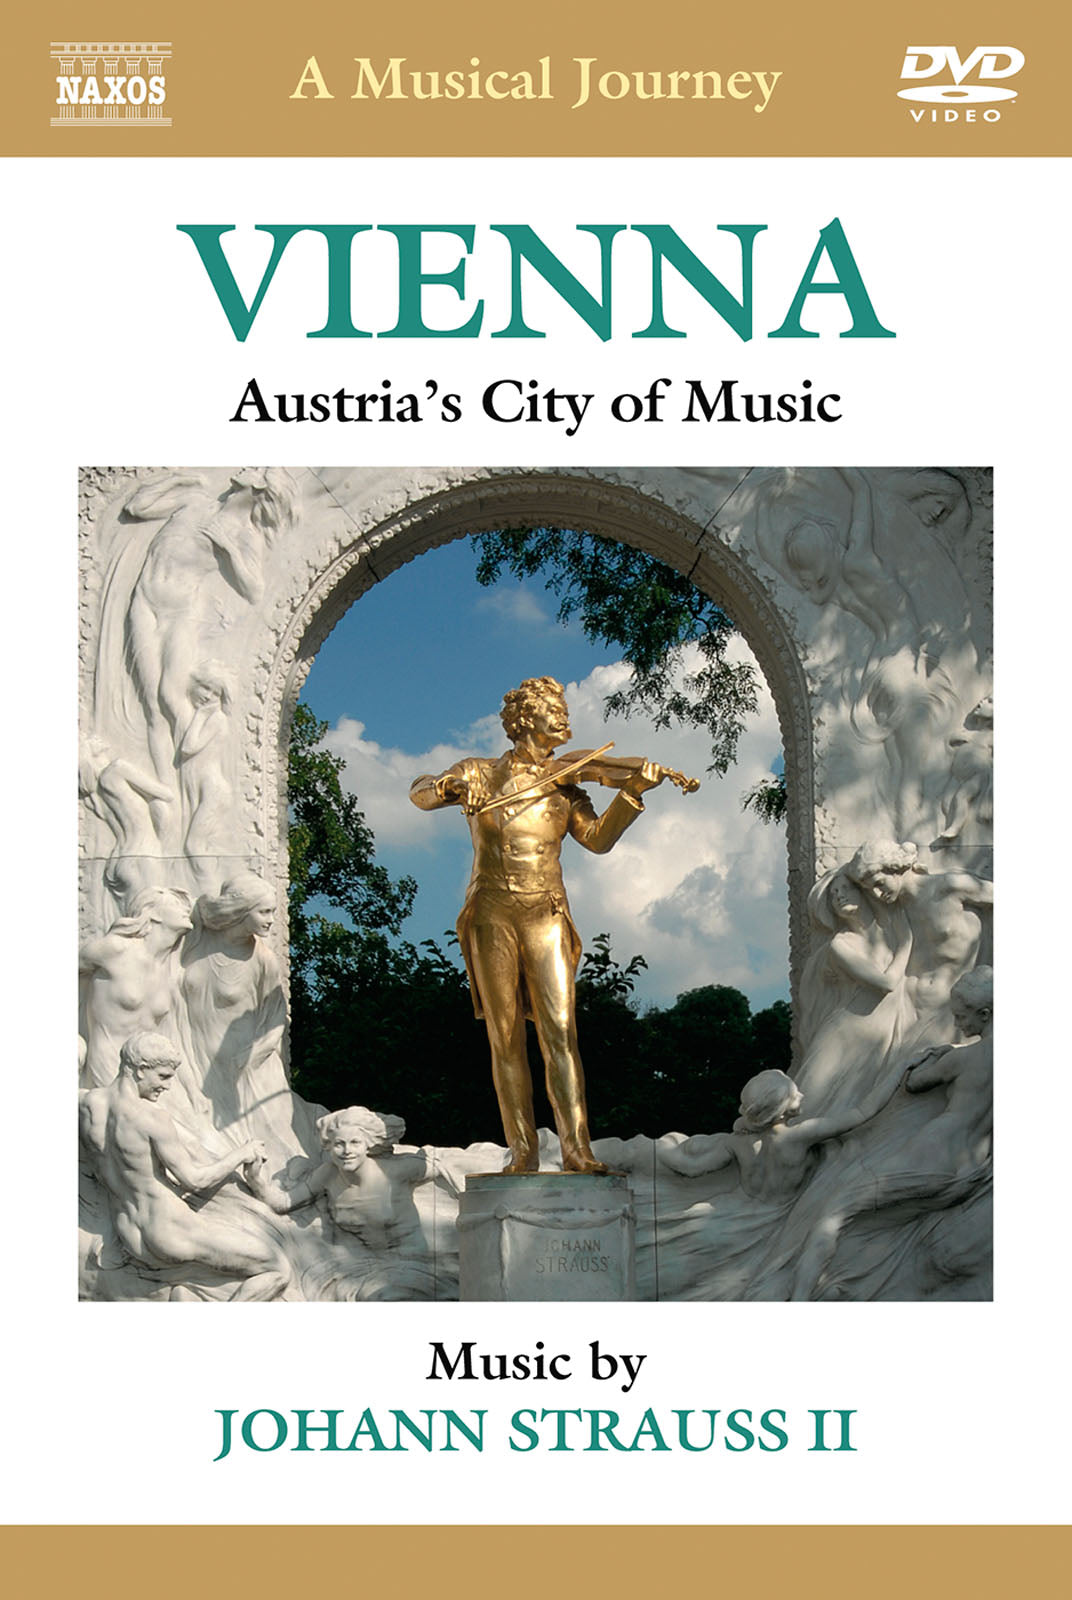 Vienna: Austria's City of Music